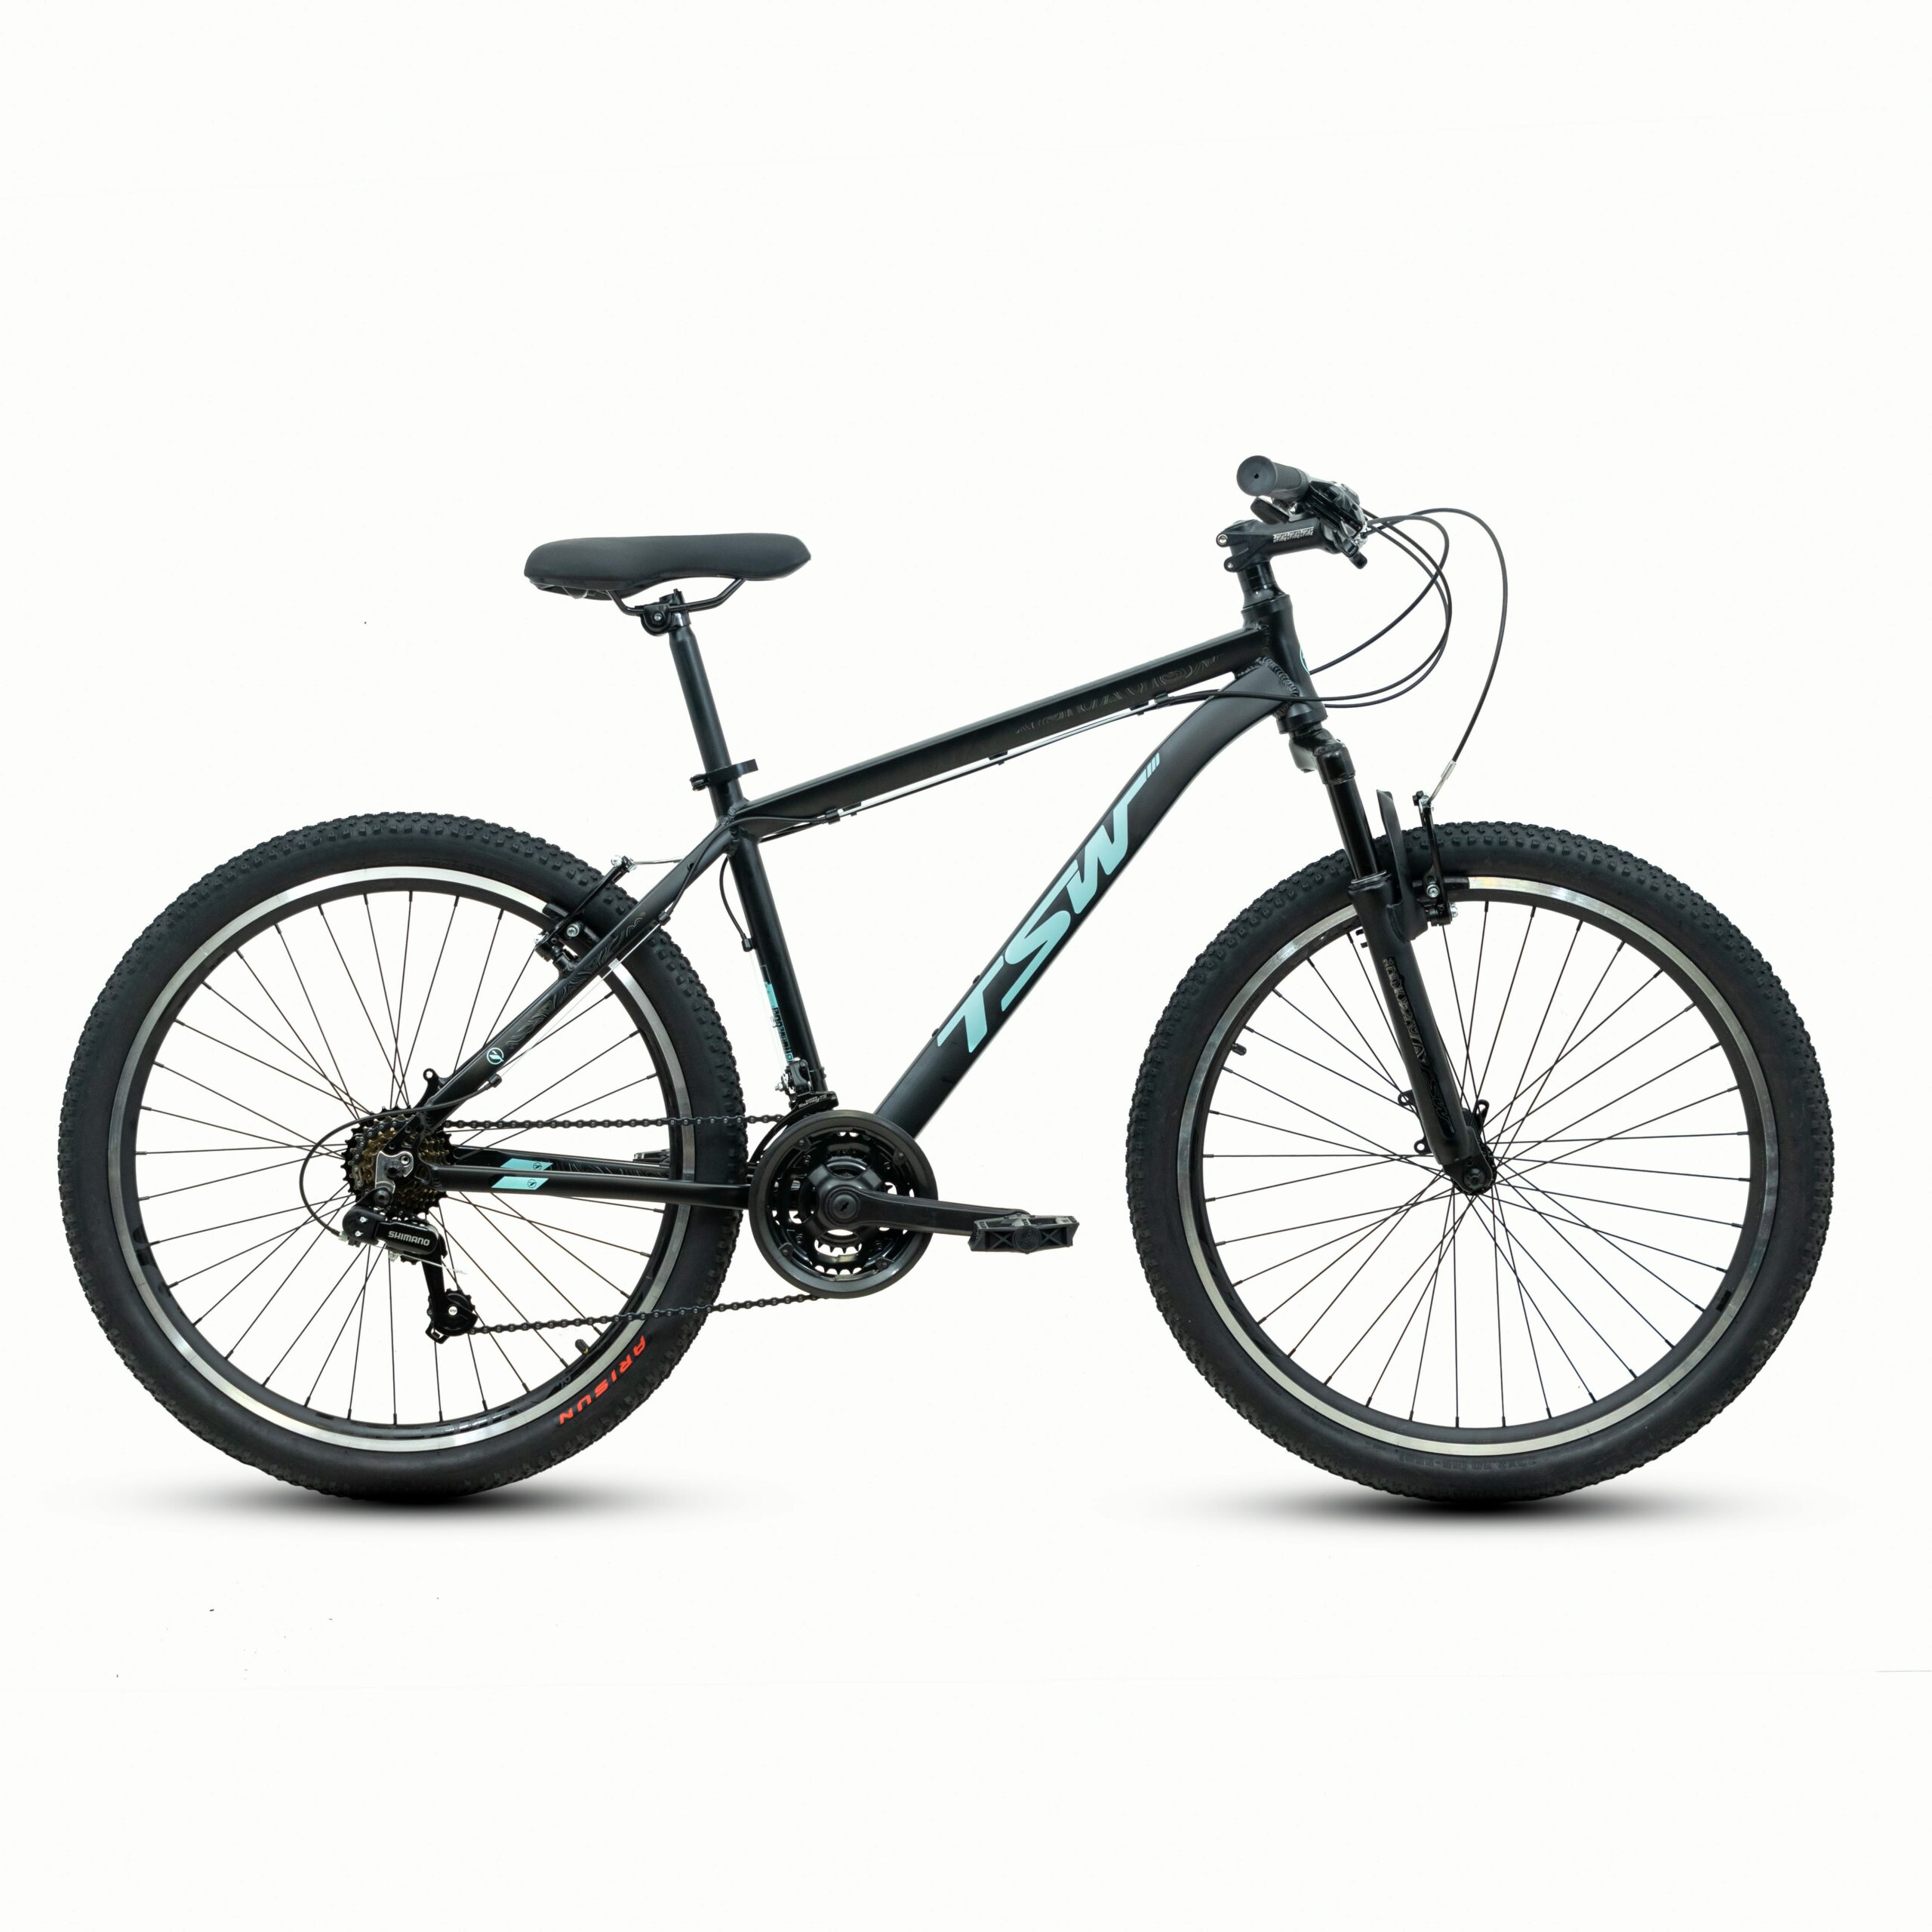 Bicicleta TSW Ride Aro 26" - 15.5", Preto/Azul